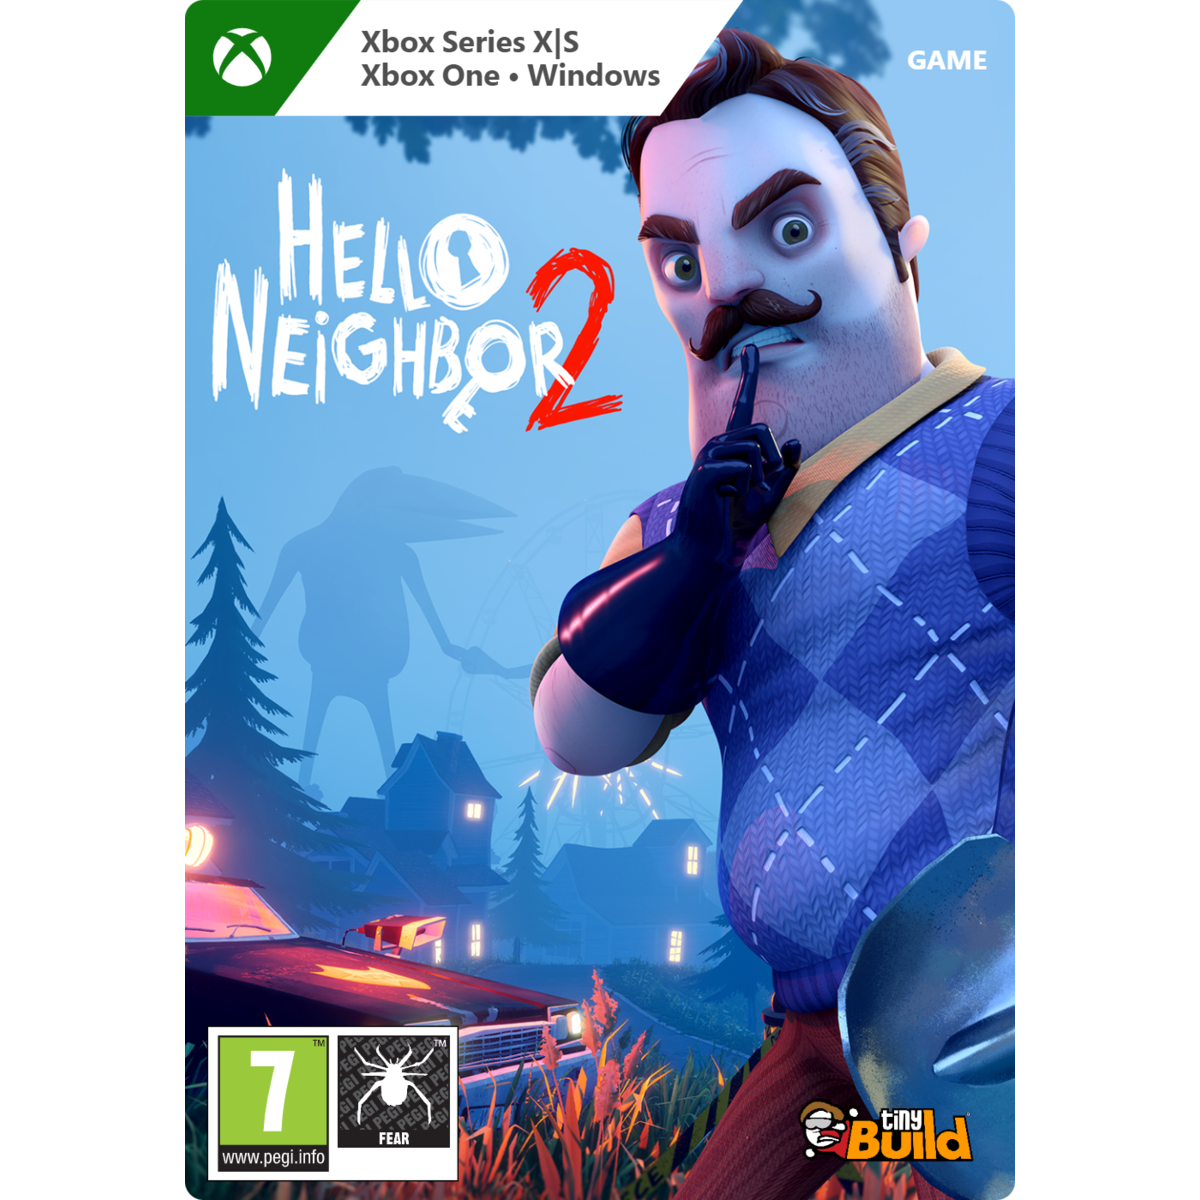 Hello Neighbor 2 Nintendo Switch - Best Buy